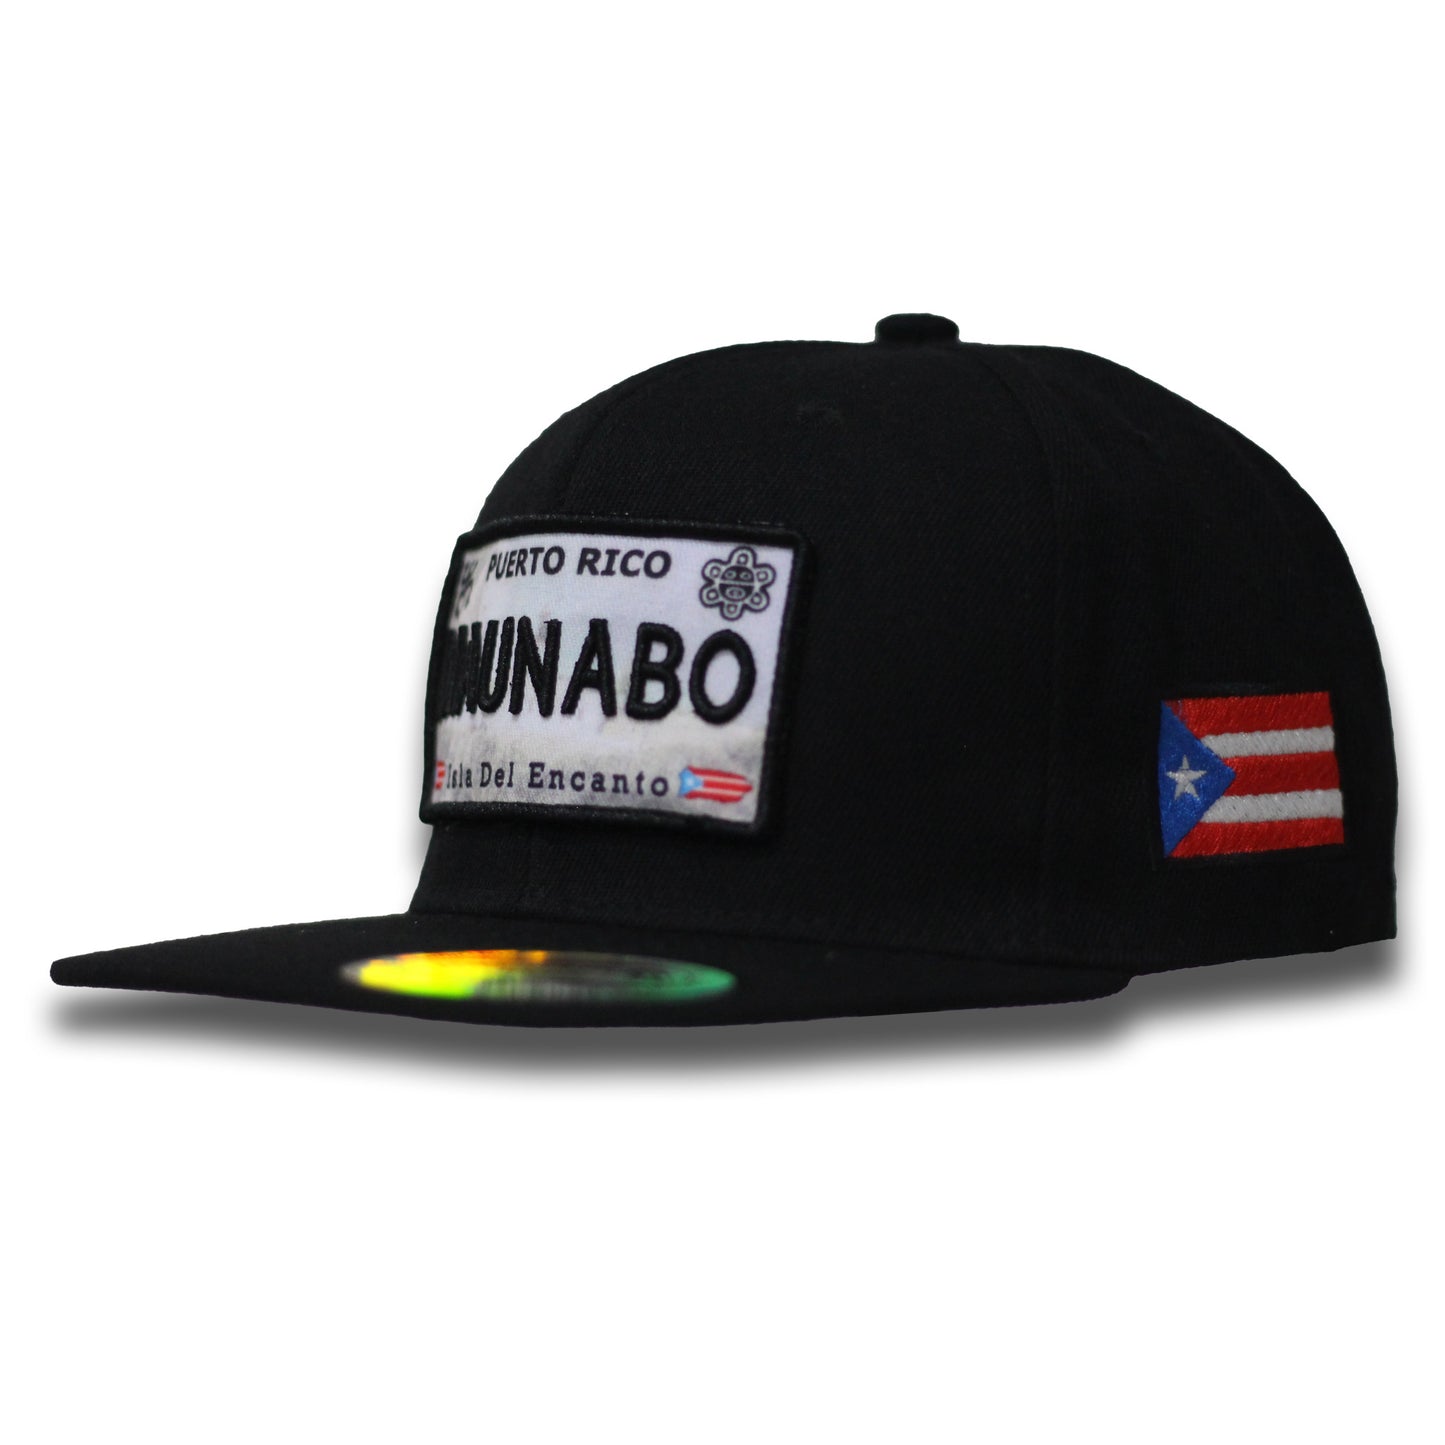 Maunabo Hat